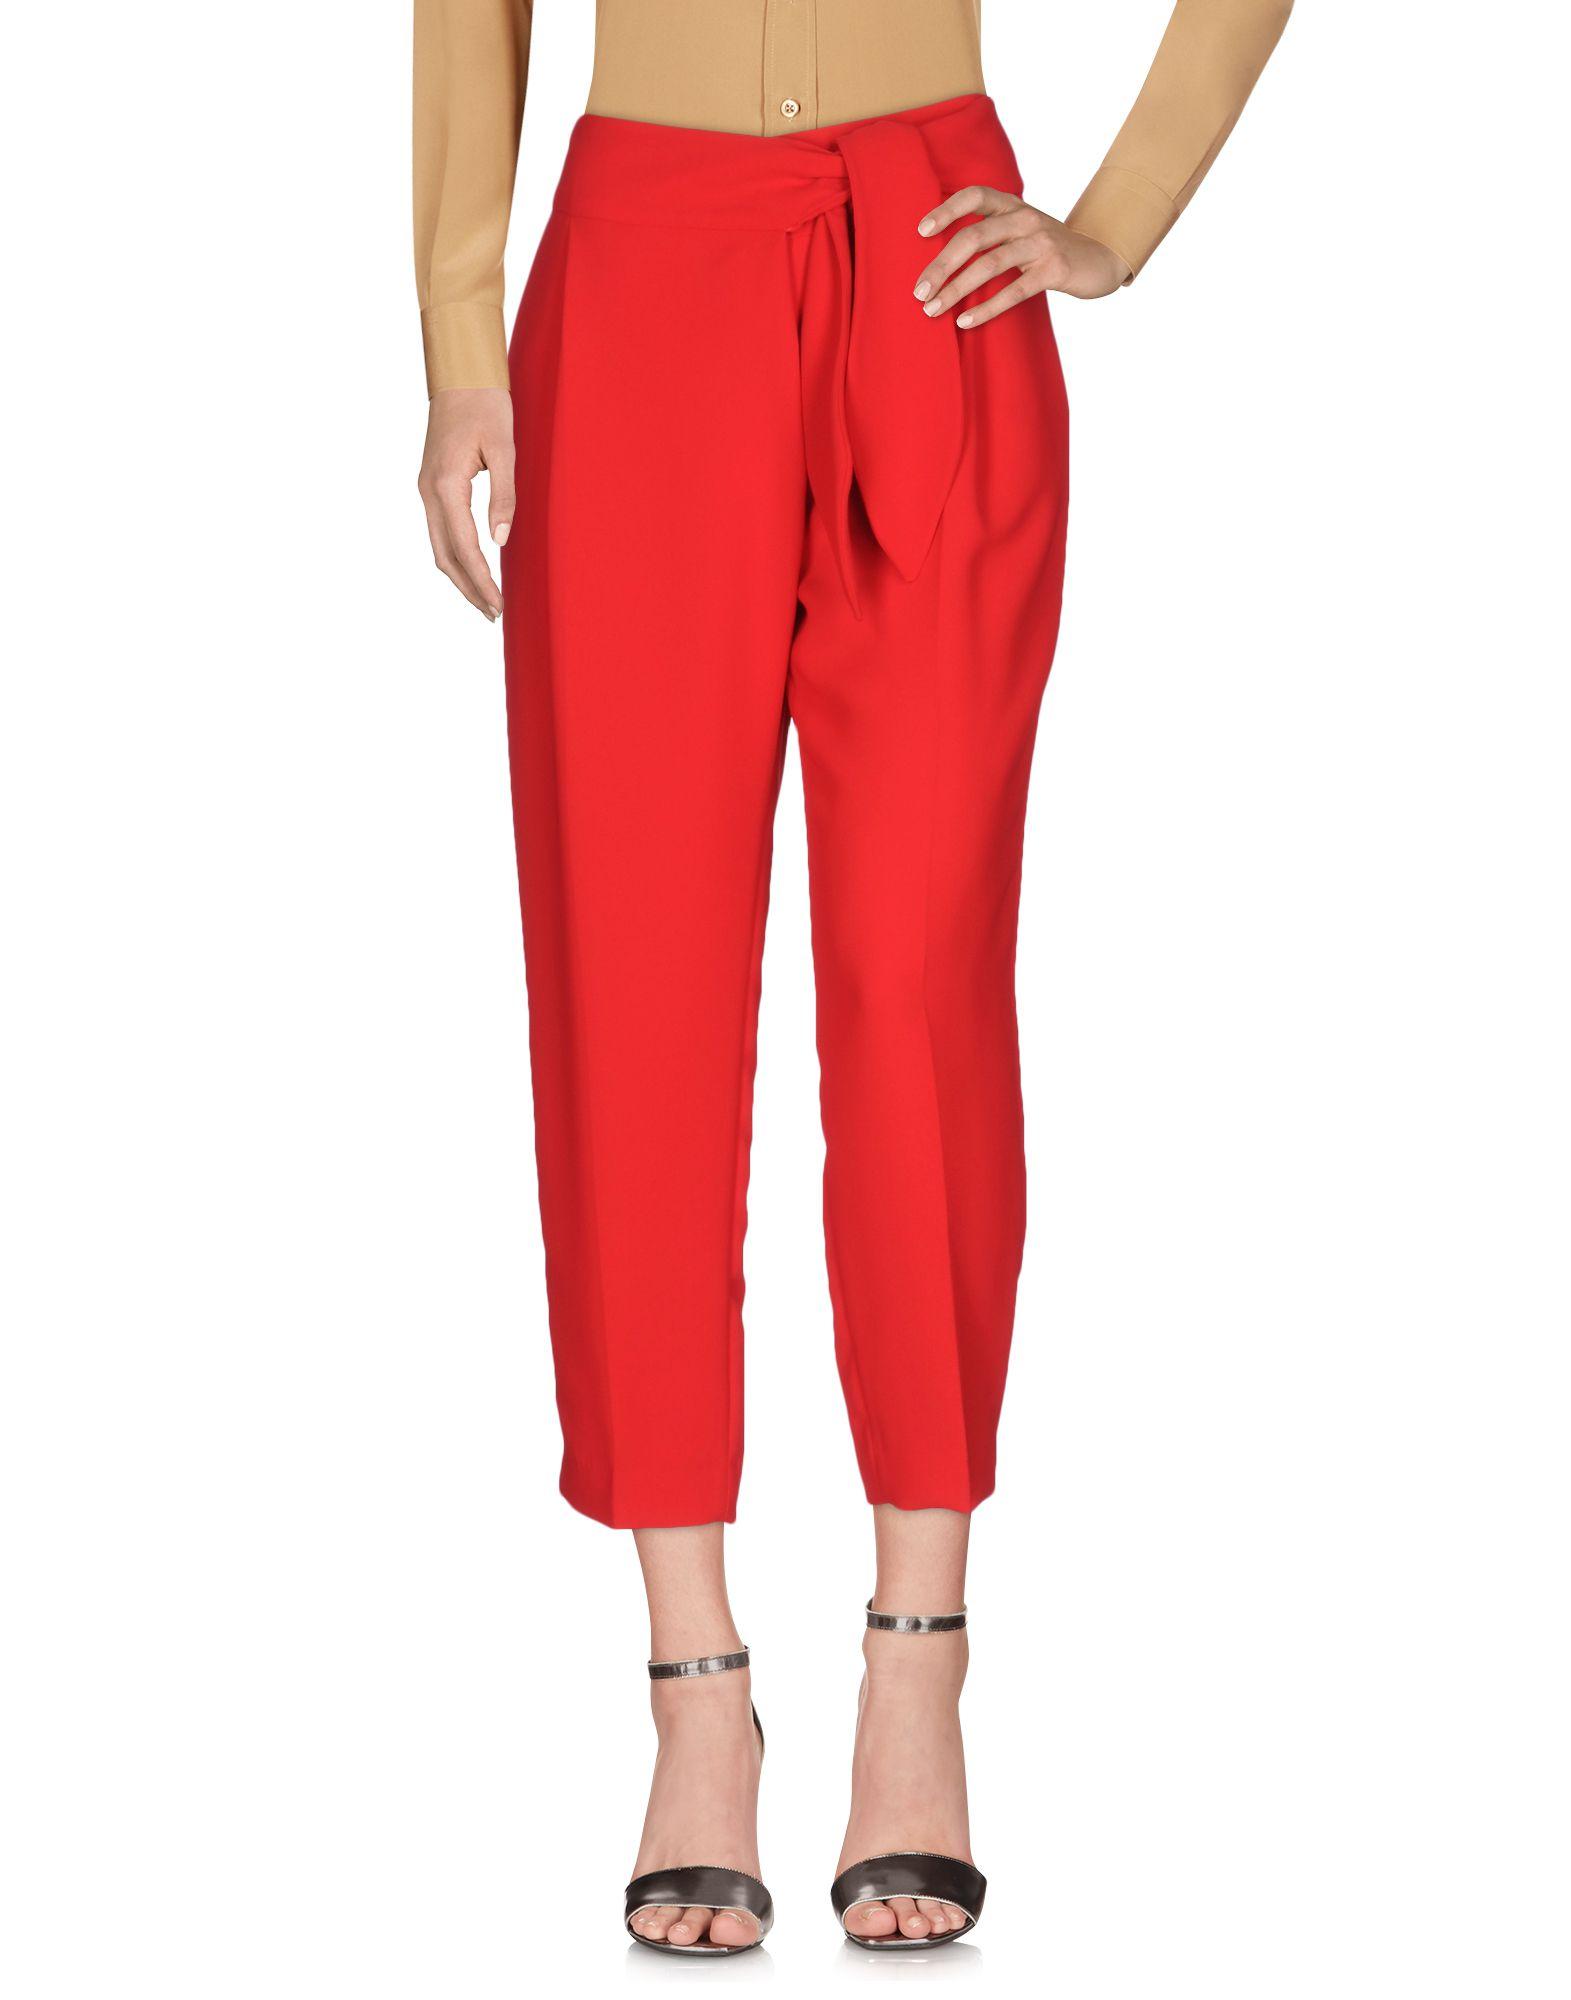 Lyst - Carolina Herrera Casual Pants in Red